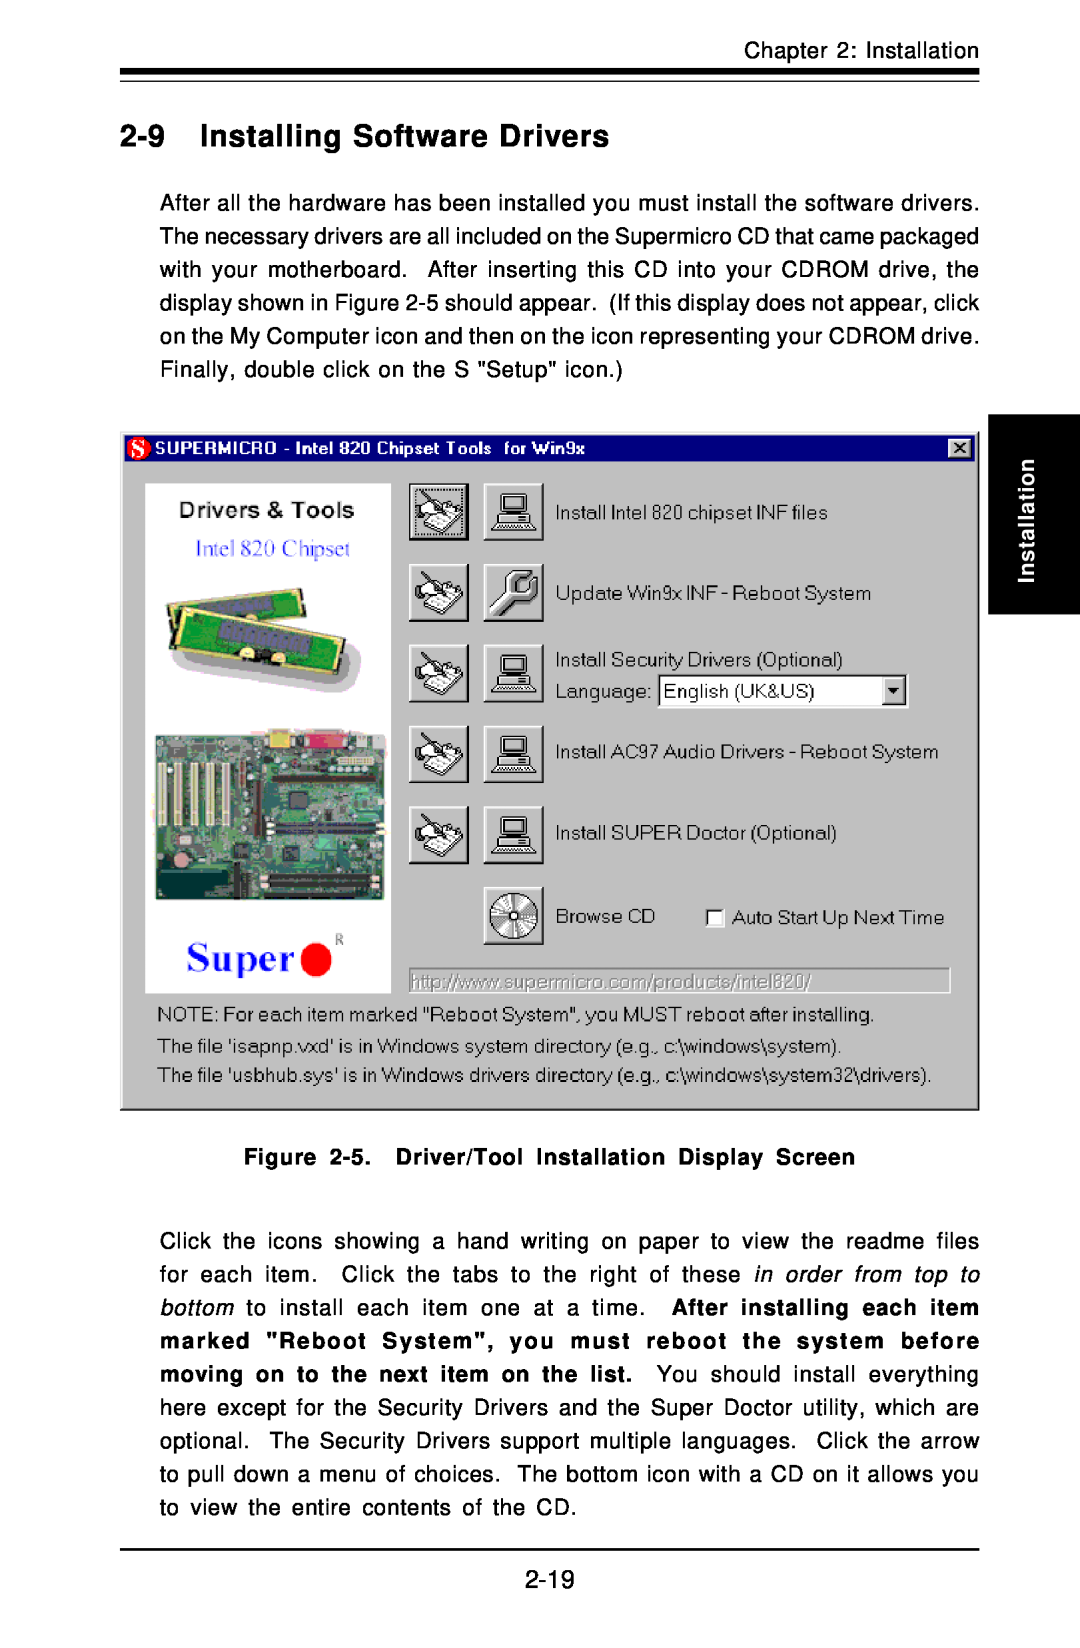 SUPER MICRO Computer Super PIIIDME user manual Installing Software Drivers, 5. Driver/Tool Installation Display Screen 